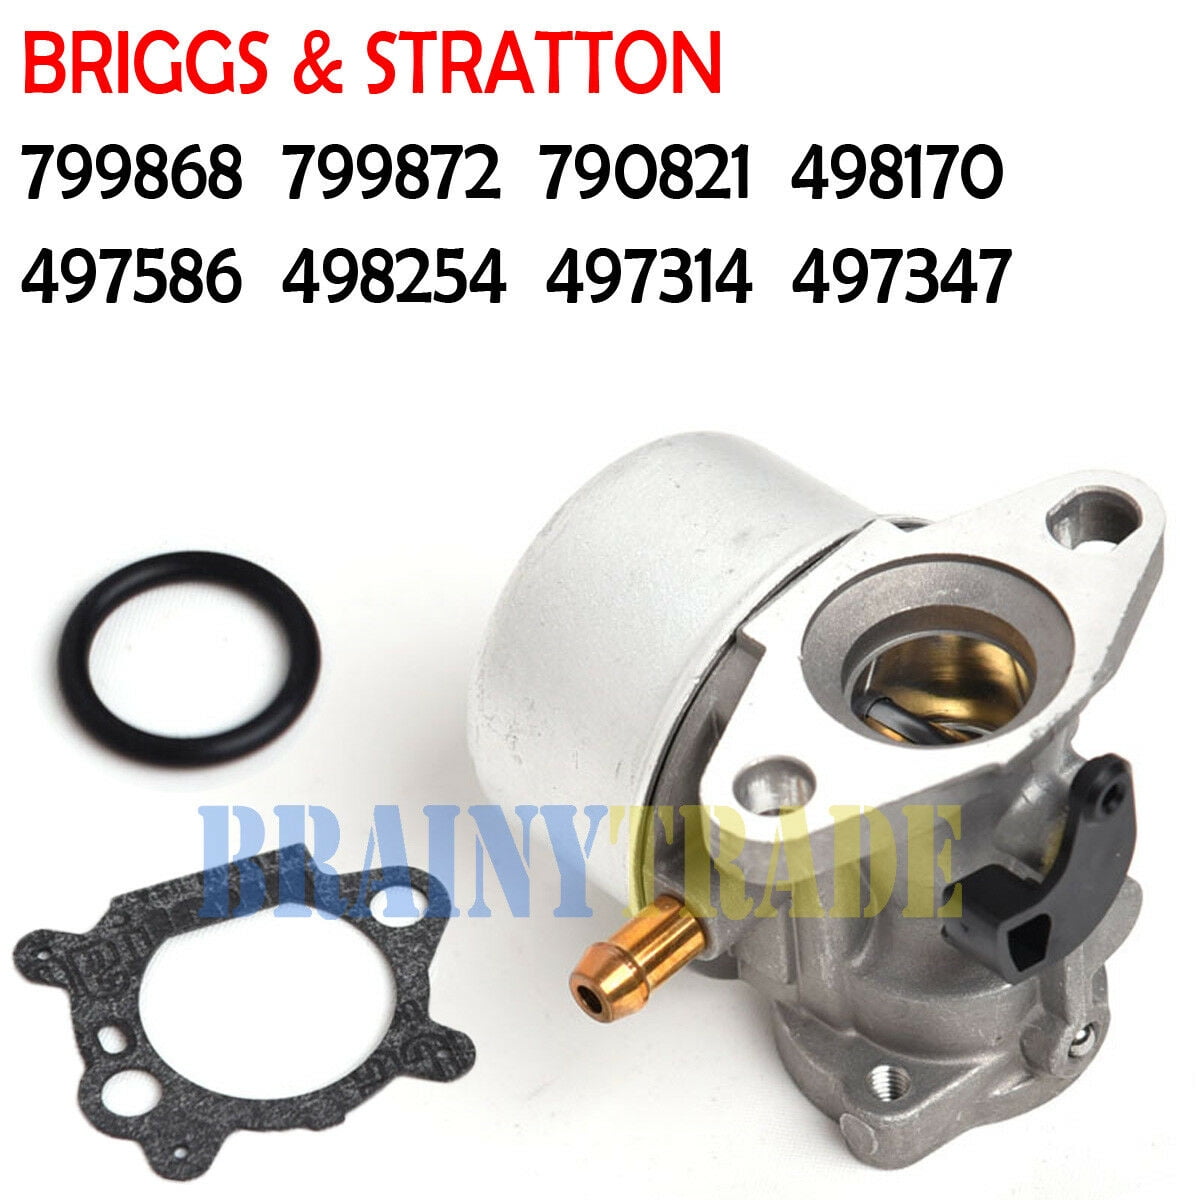 Carburetor Fit For Briggs Stratton 799868 799872 790821 498170 Lawnmower 